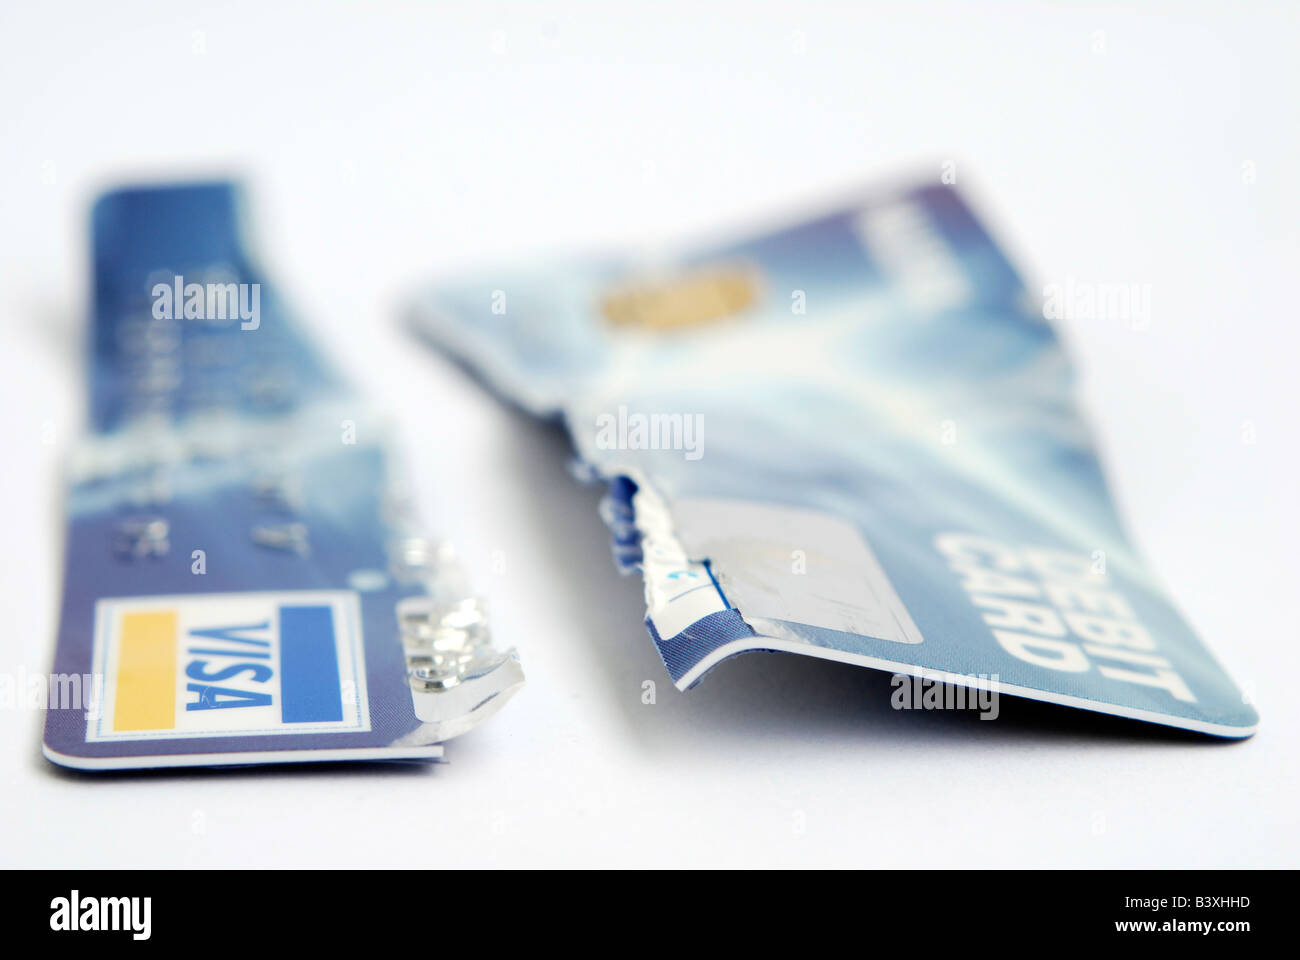 Cut up bank card immagini e fotografie stock ad alta risoluzione - Alamy